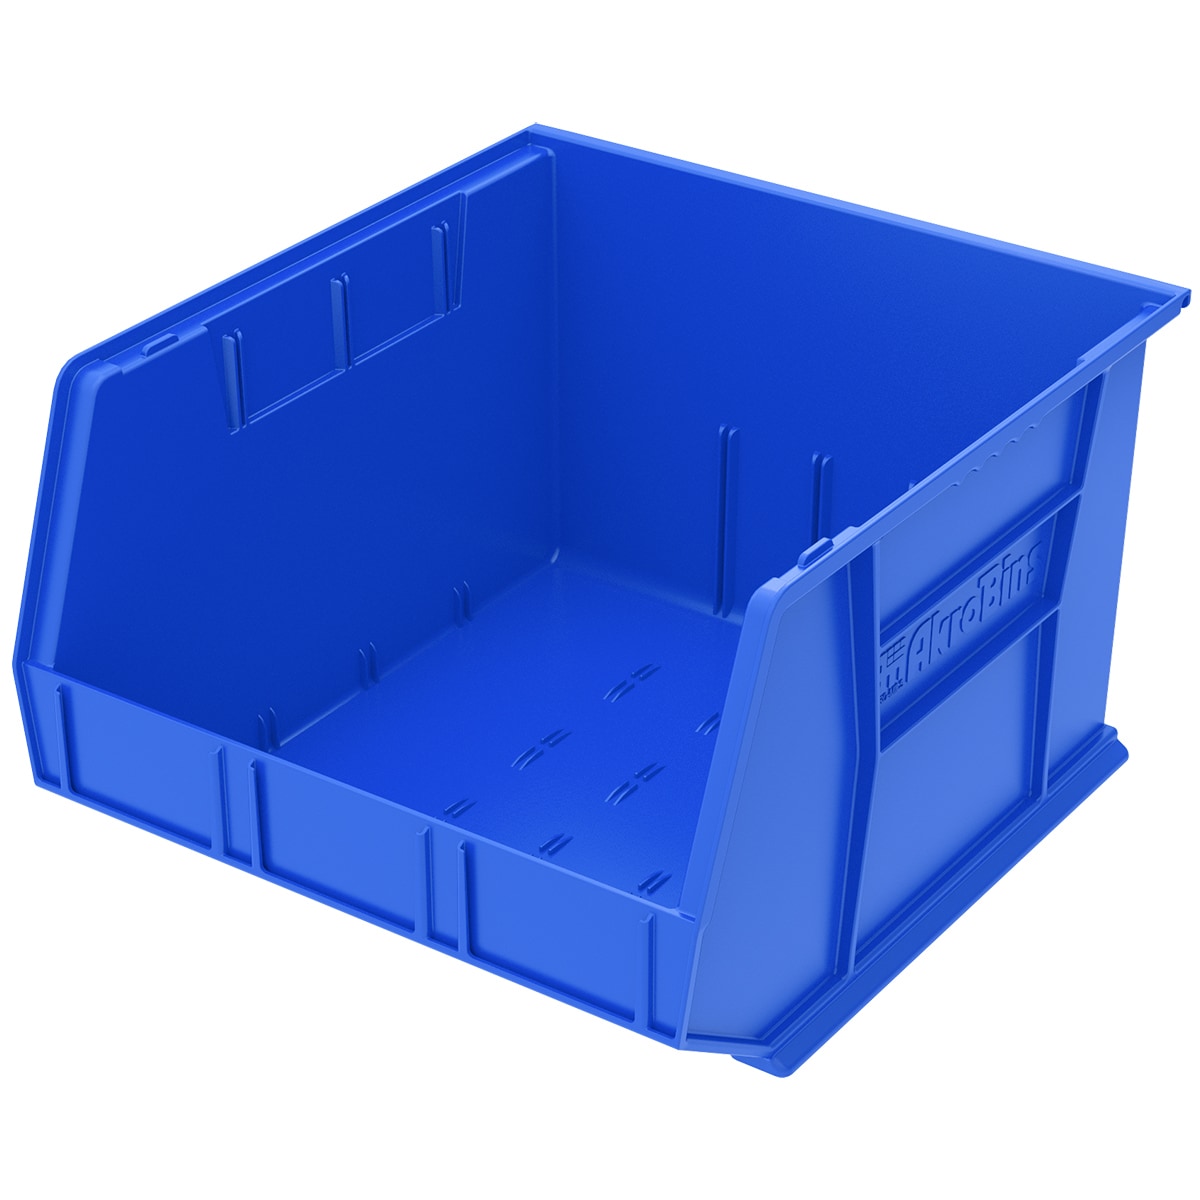 AkroBin Blue Plastic 18 x 16.5 x 11-inch Bin Organizer (Pack of 3)